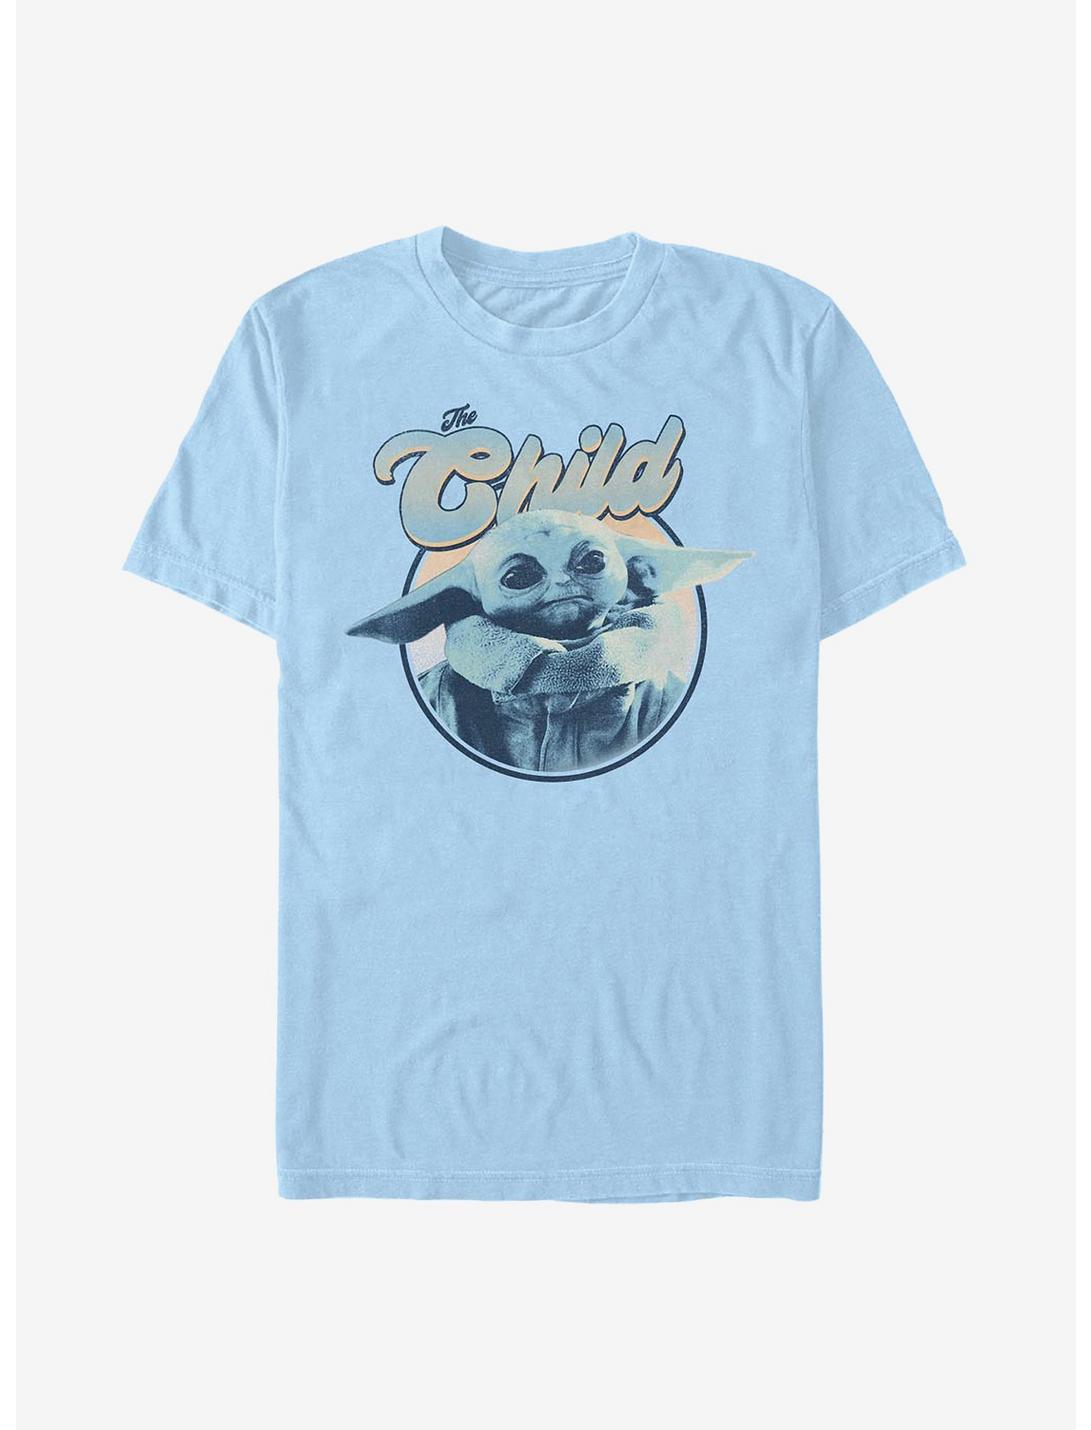 Star Wars The Mandalorian Retro Child Frame T-Shirt, LT BLUE, hi-res